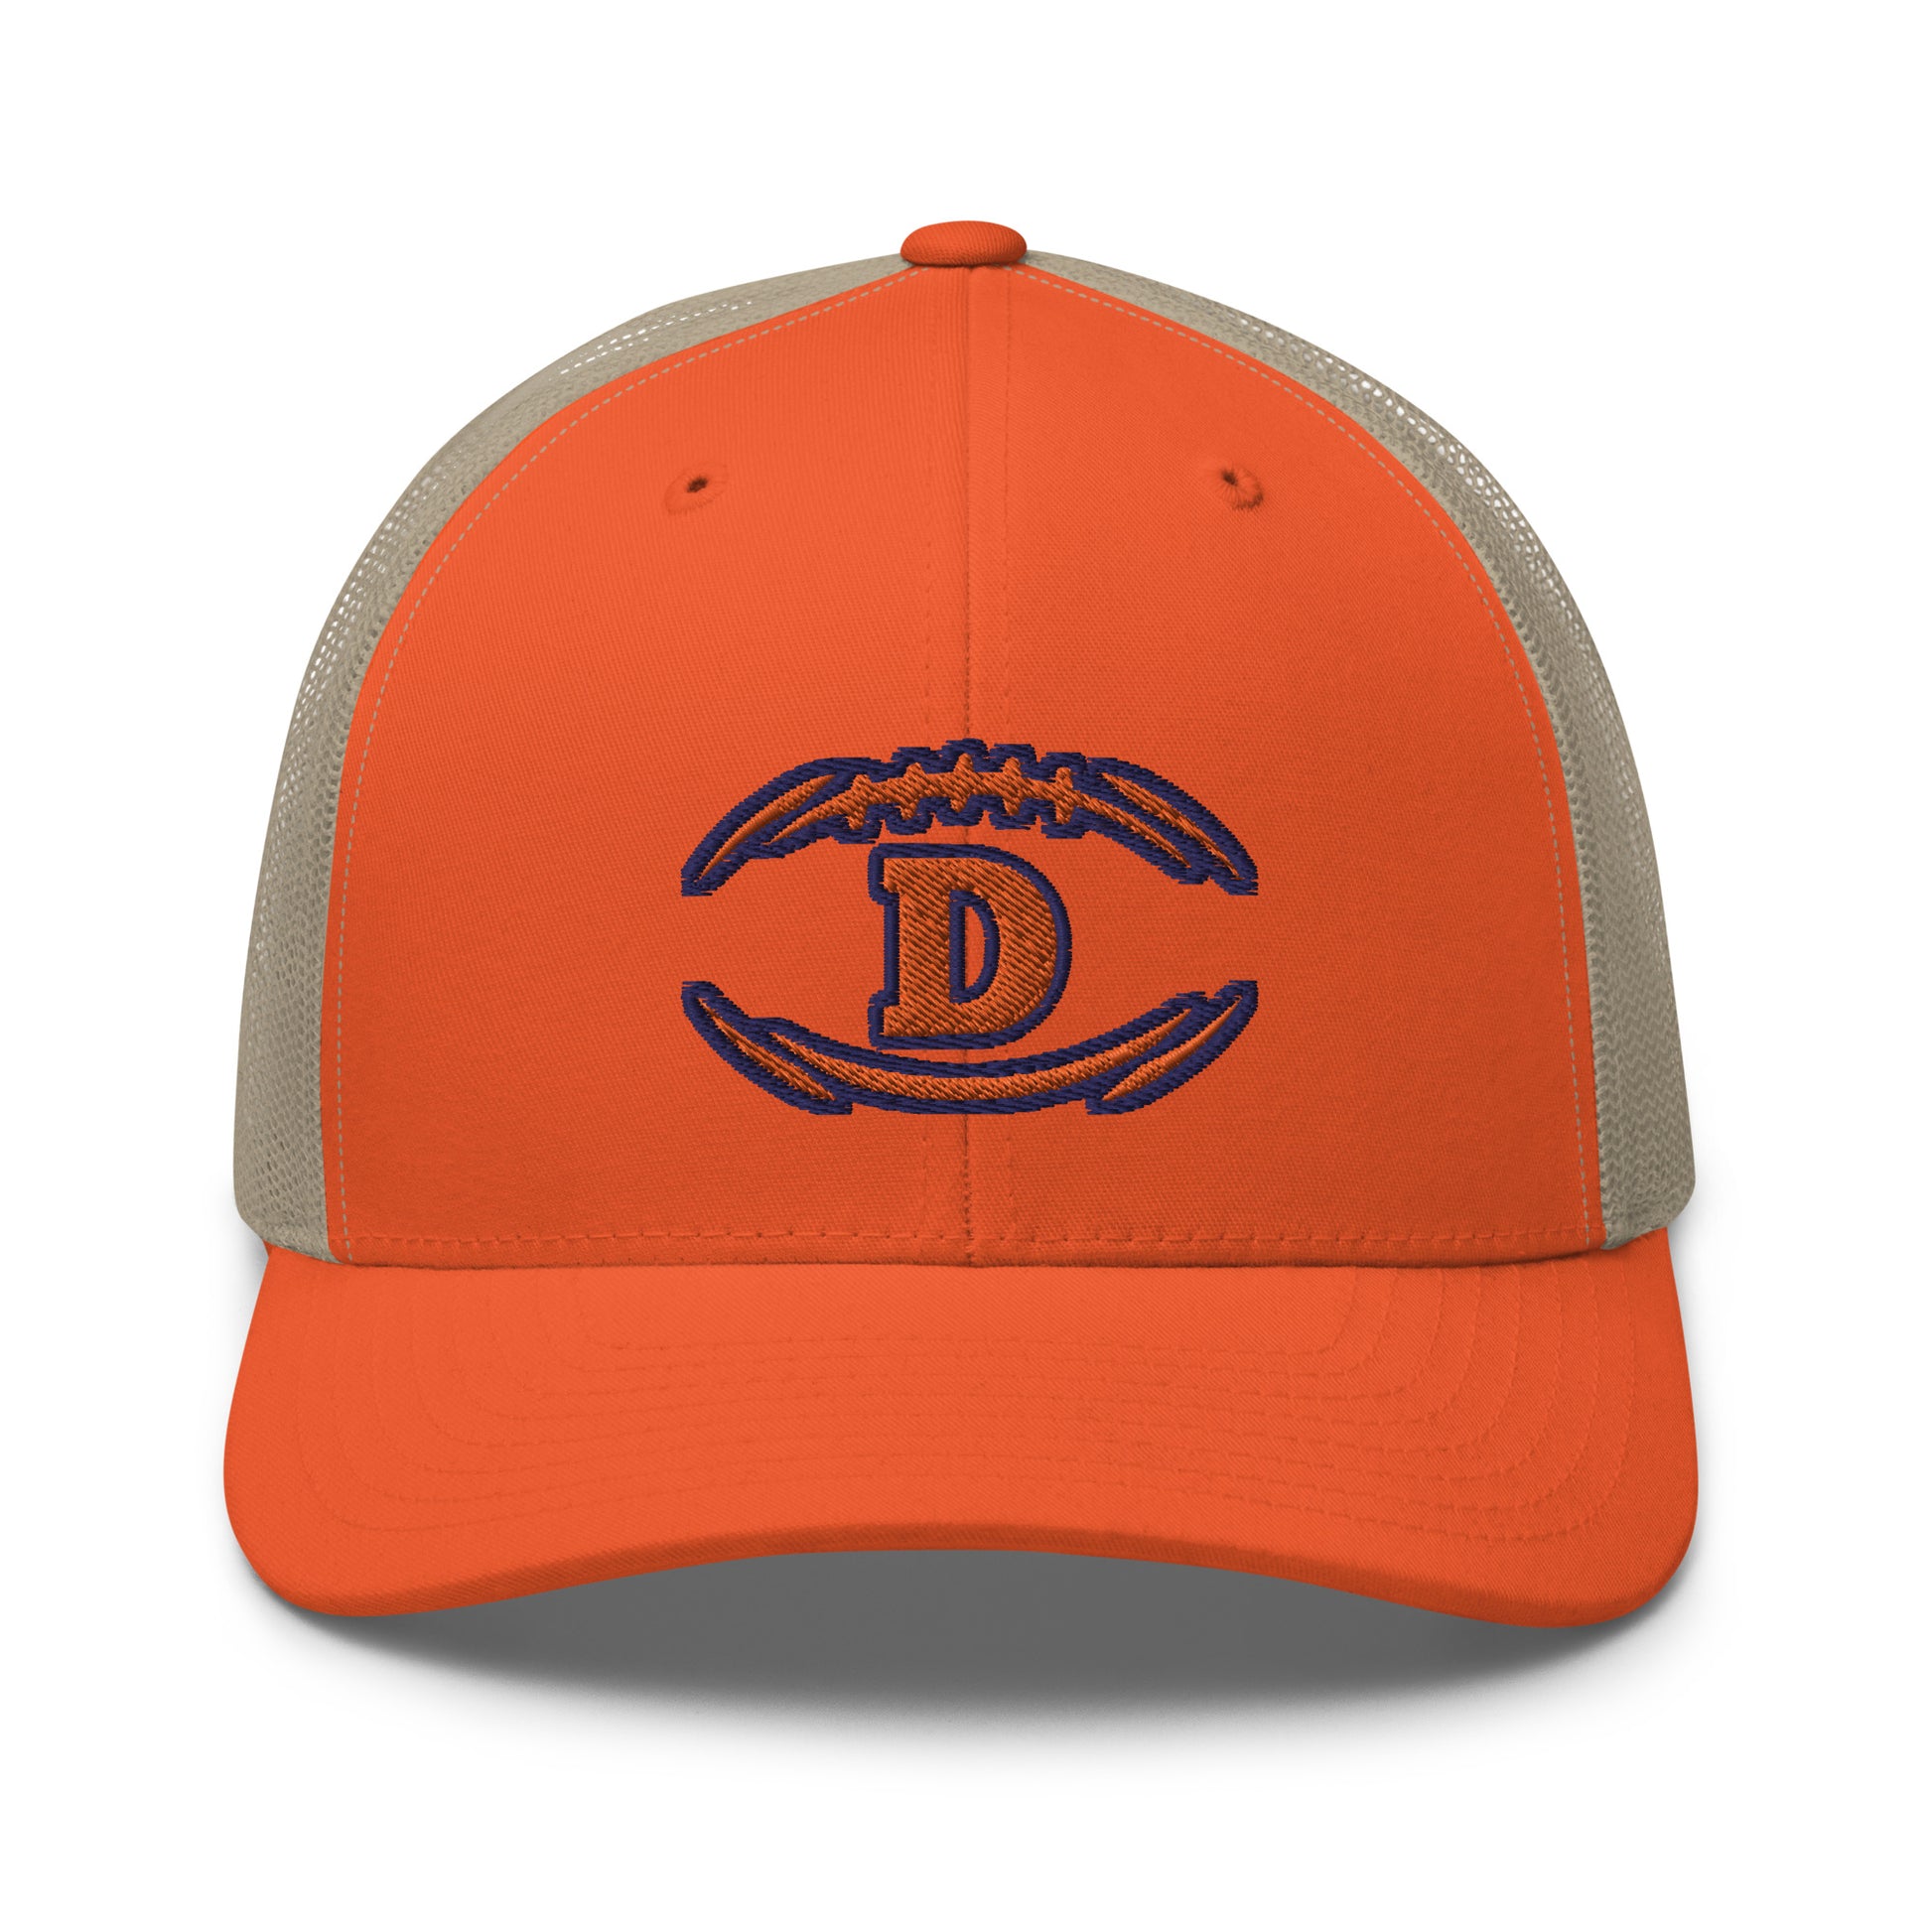 Broncos Hat / Denver Broncos Hat / D Hat / Trucker Cap Rustic Orange/ Khaki